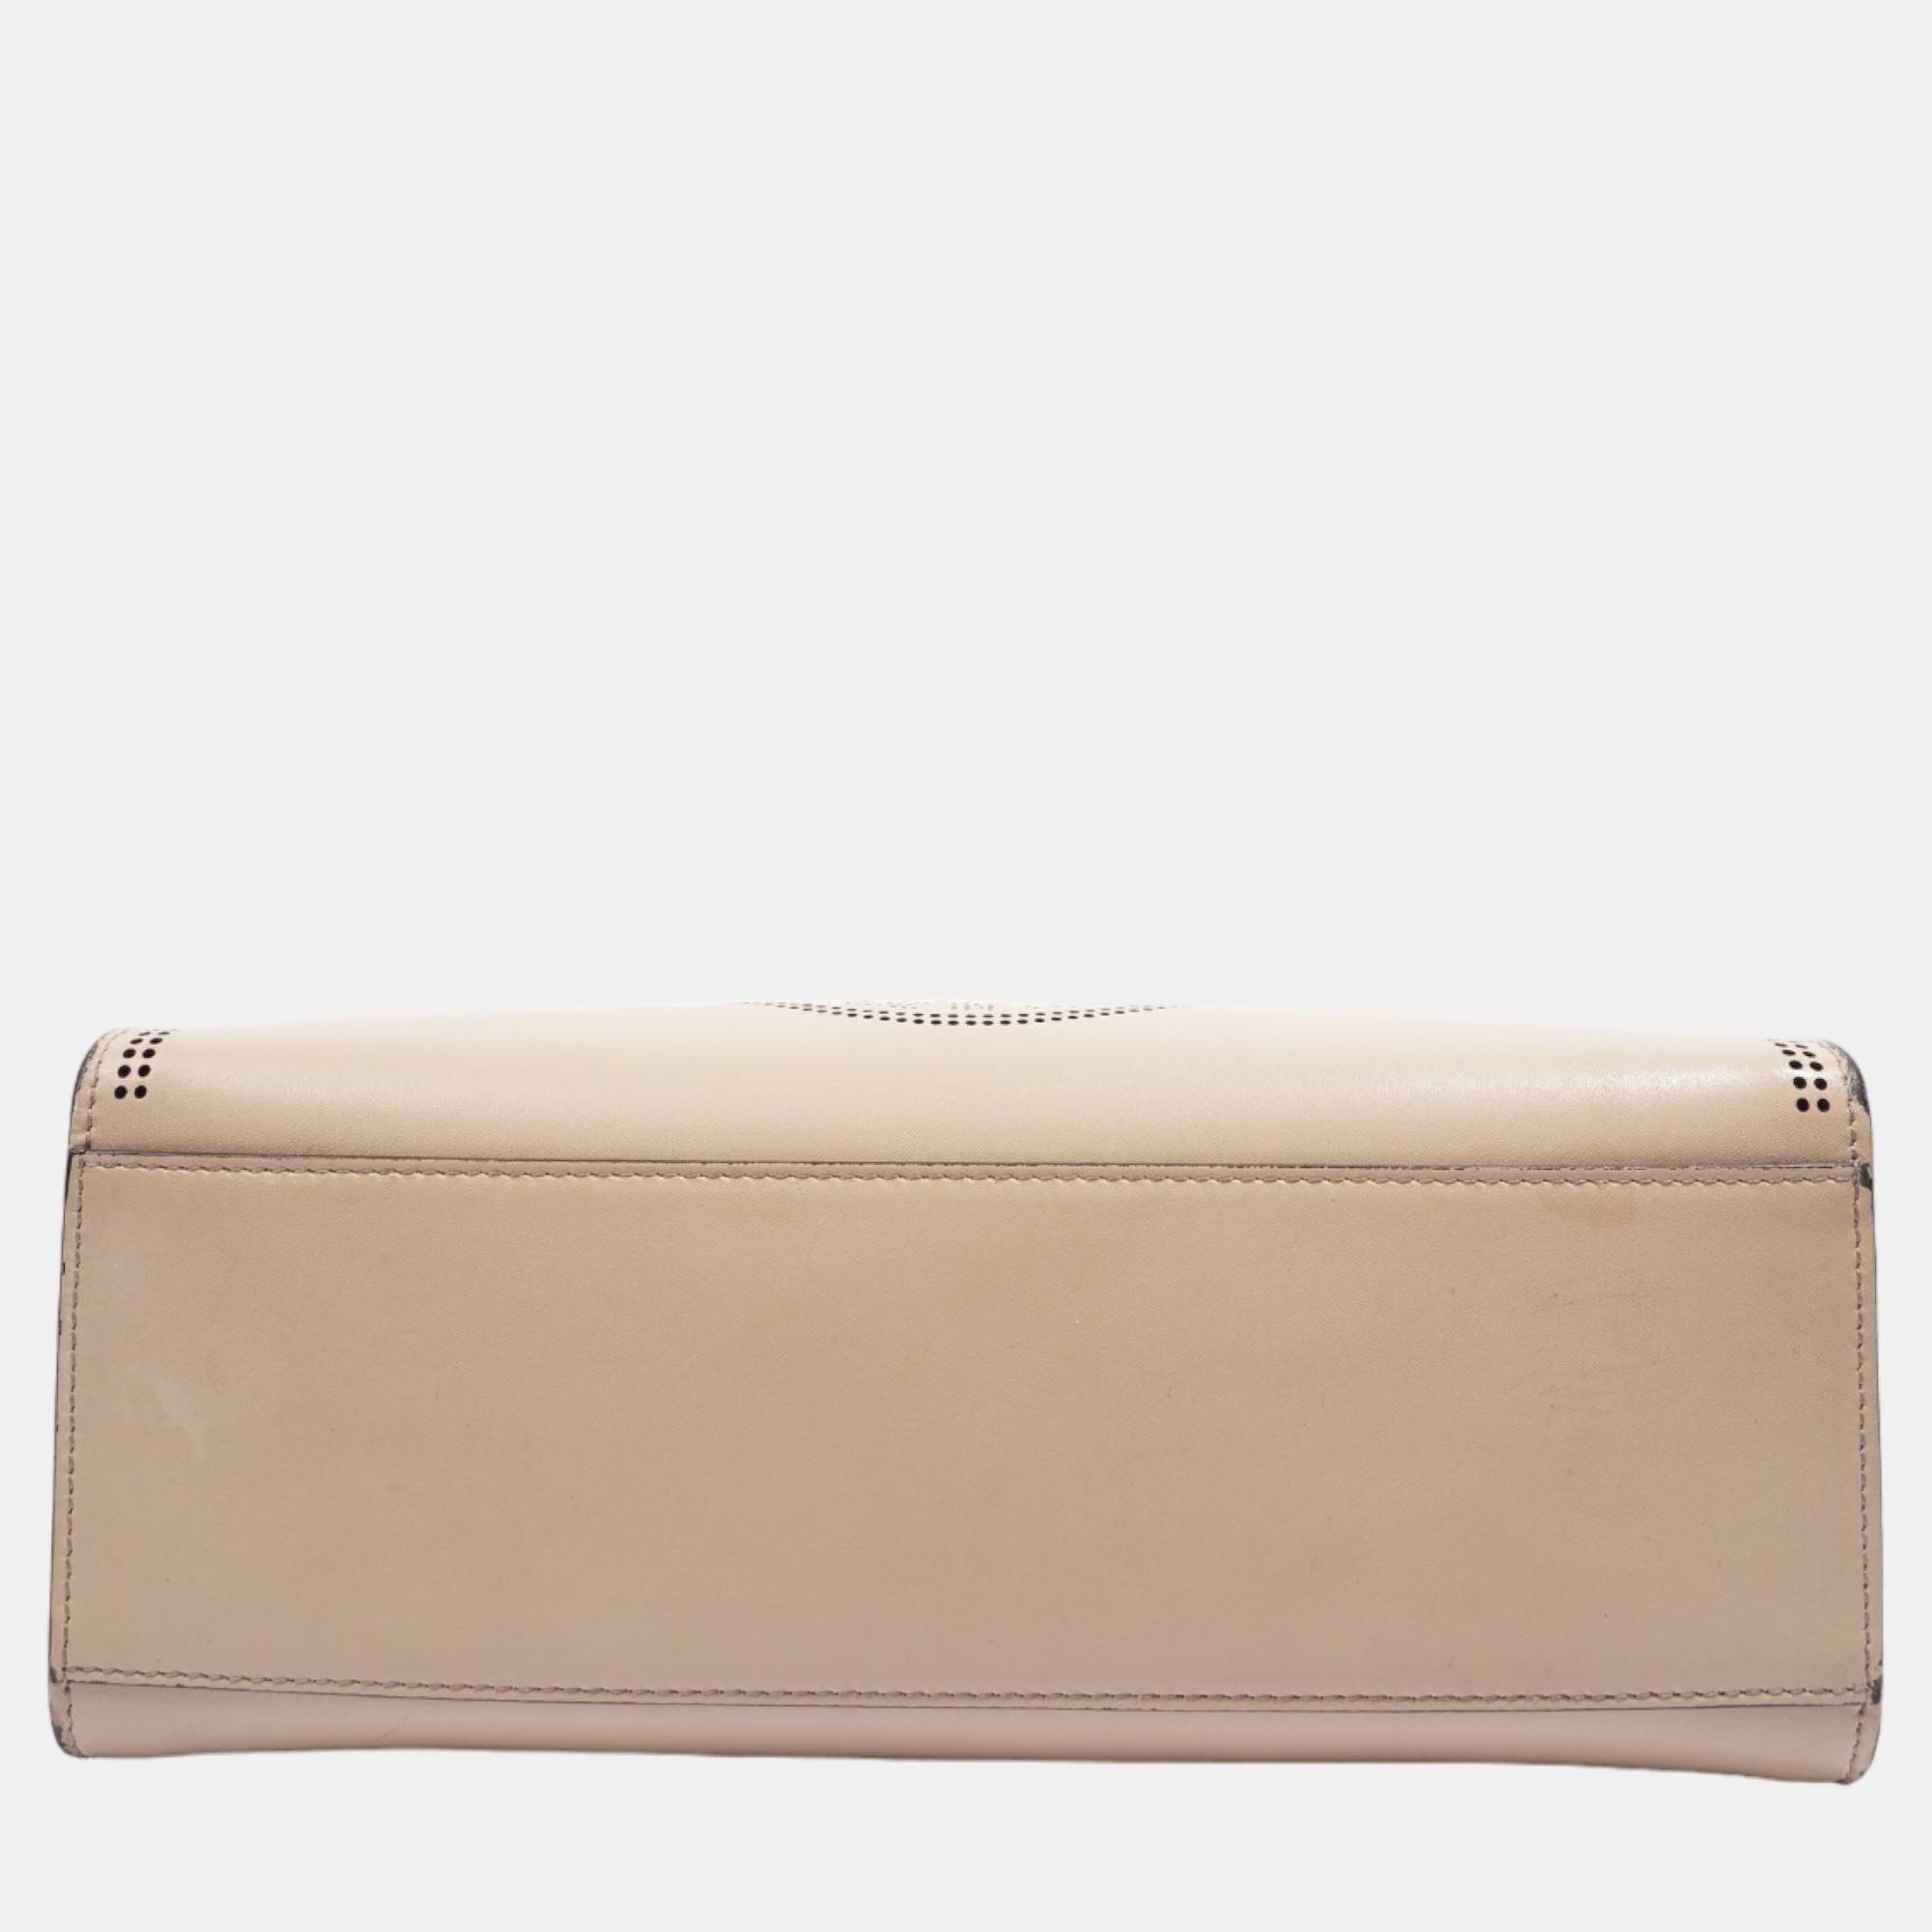 Fendi Runway Shopping Bag Cream Leather